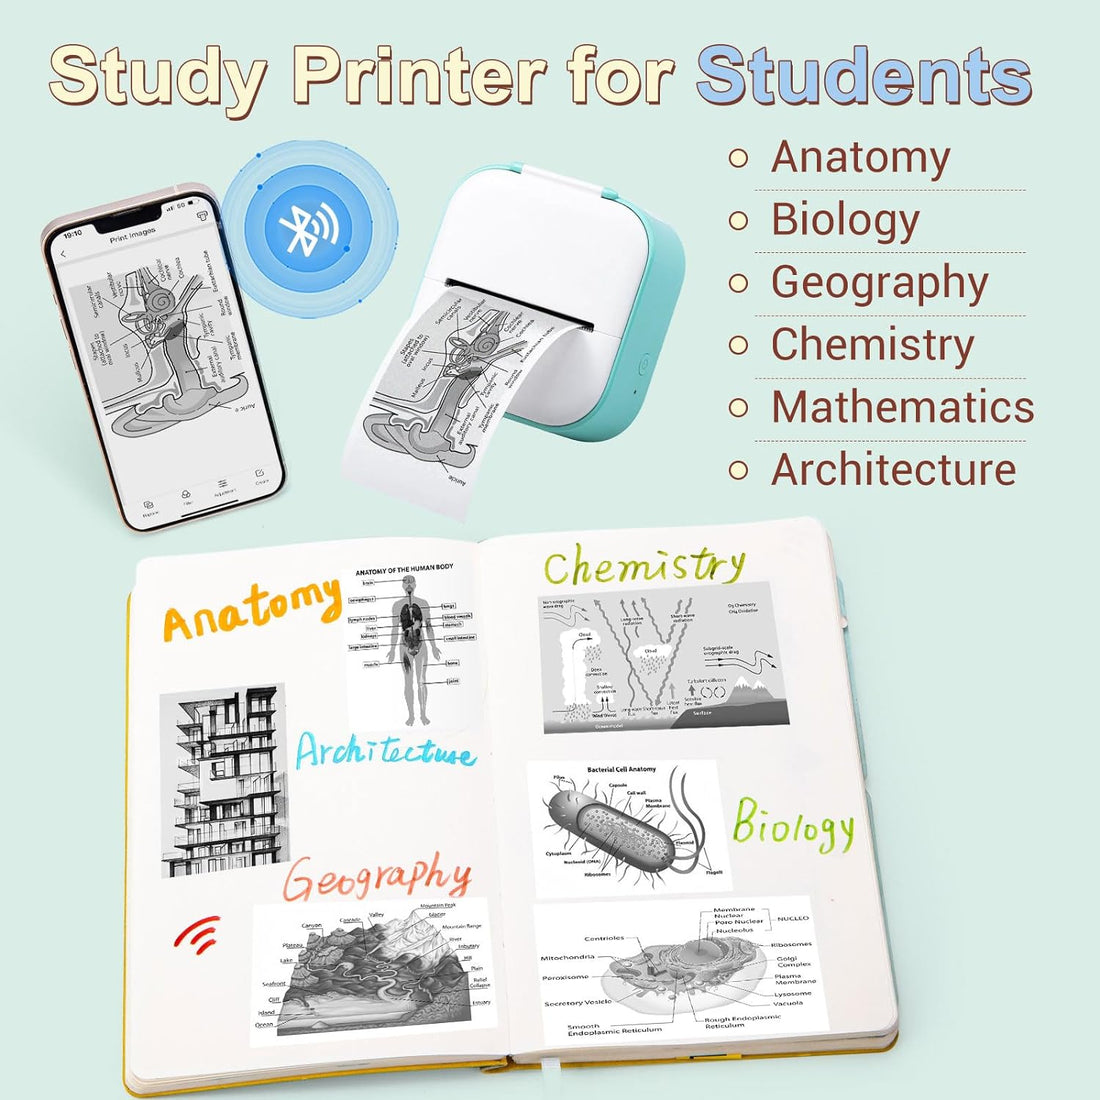 Sticker Printer - Mini Thermal Printer, T02 Sticker Maker Machine, Portable Bluetooth Pocket Phone Printer for Anatomy Flashcards, Journal, Photos, Notes, Kids Gift, Green